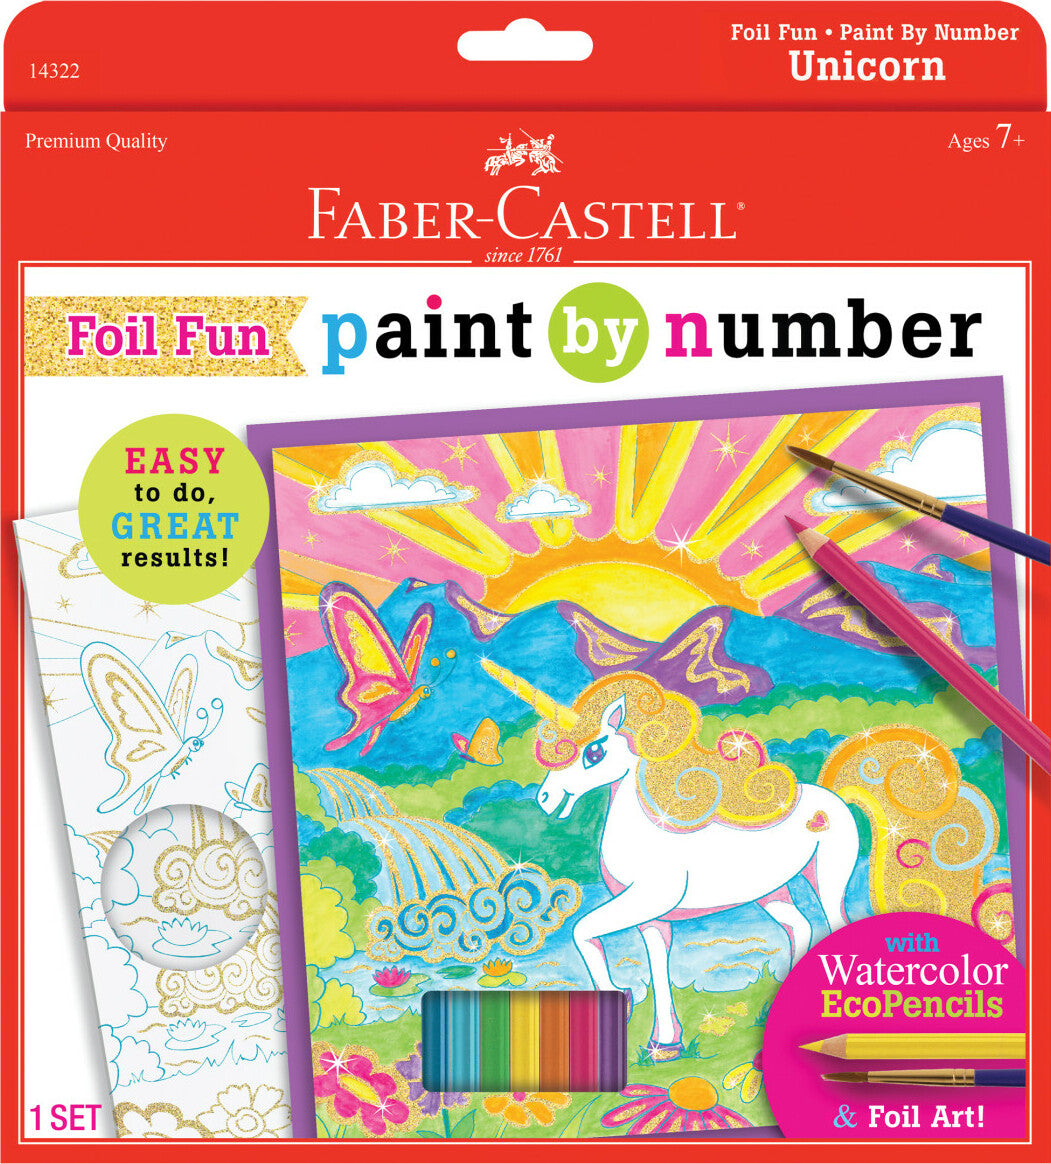 Paint by Number Unicorn Foil Fun